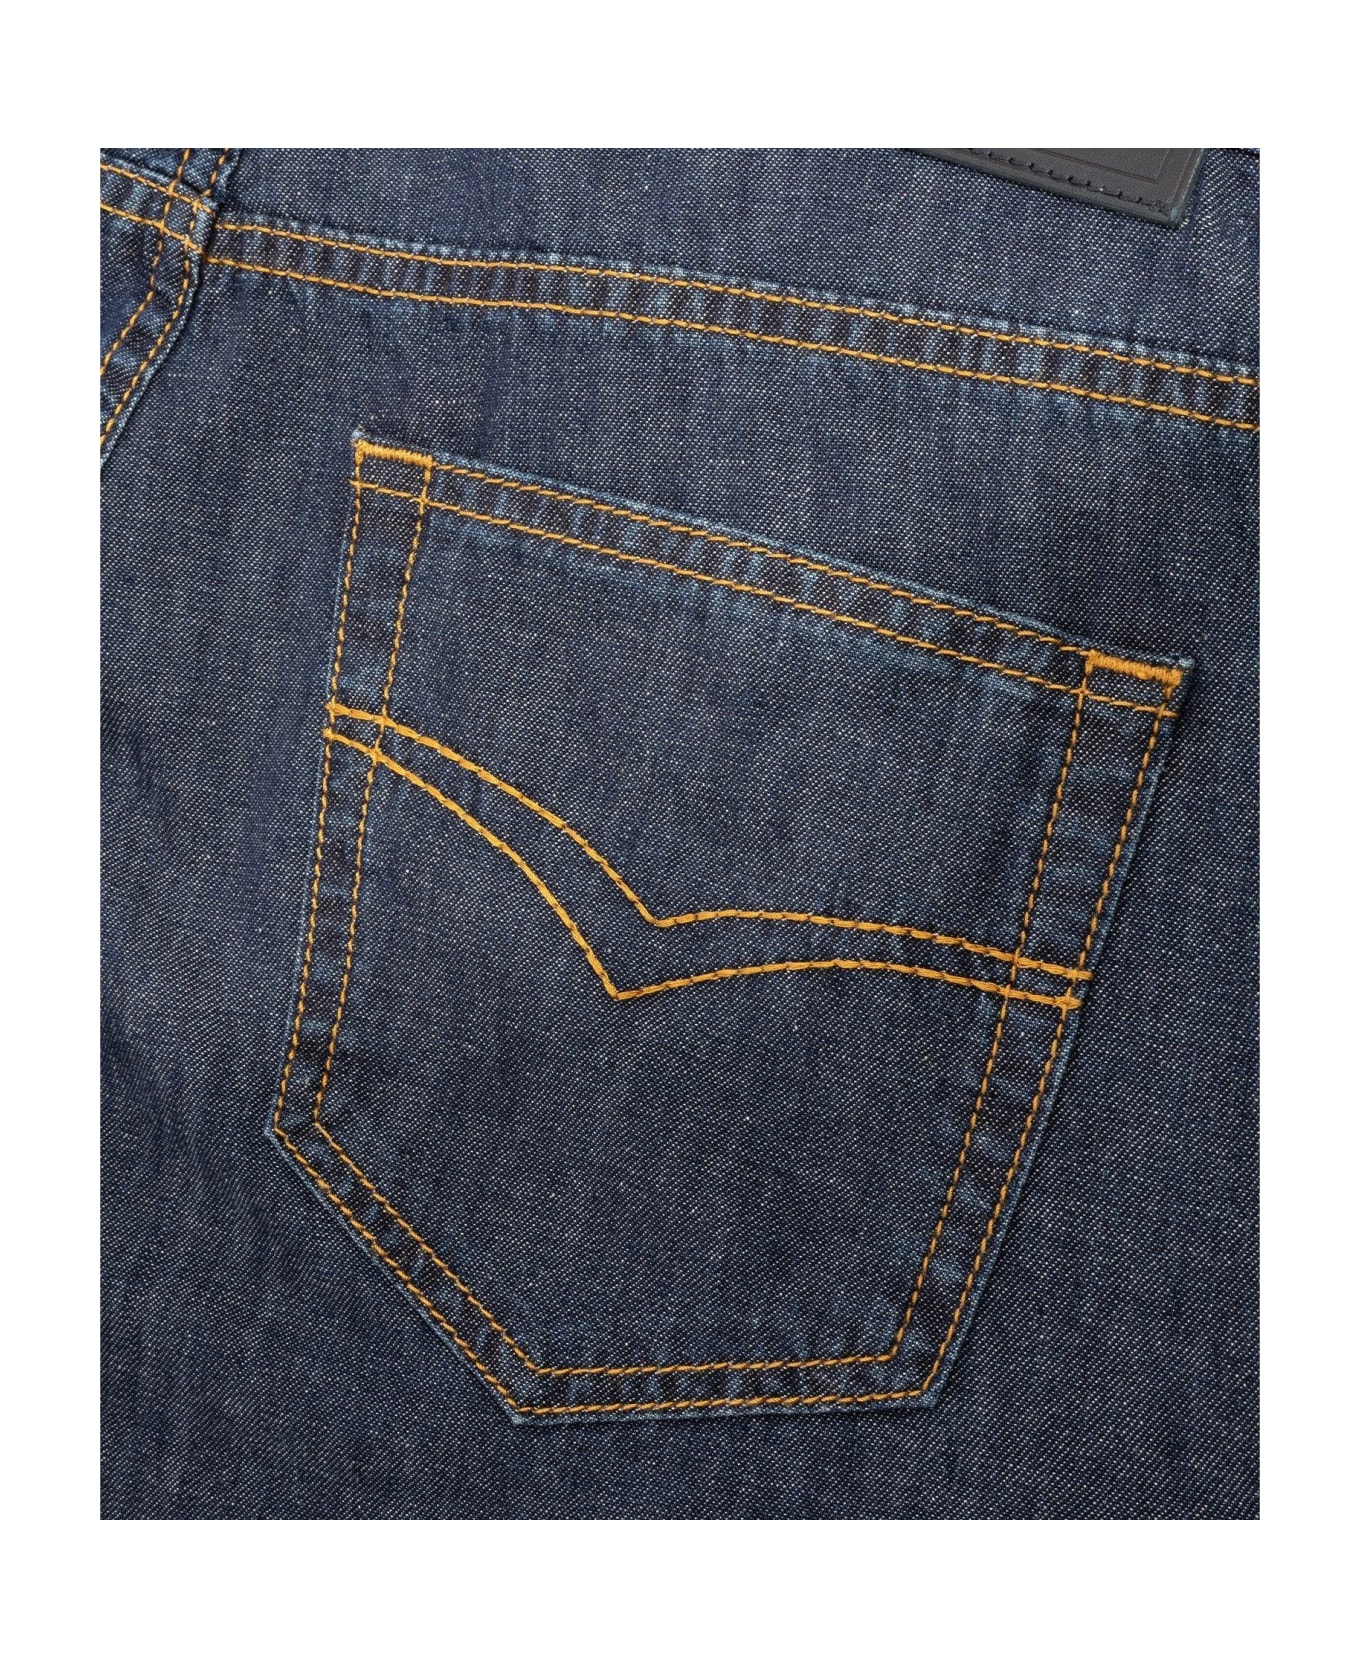 Larusmiani Trousers Jeans Jeans - Blue デニム